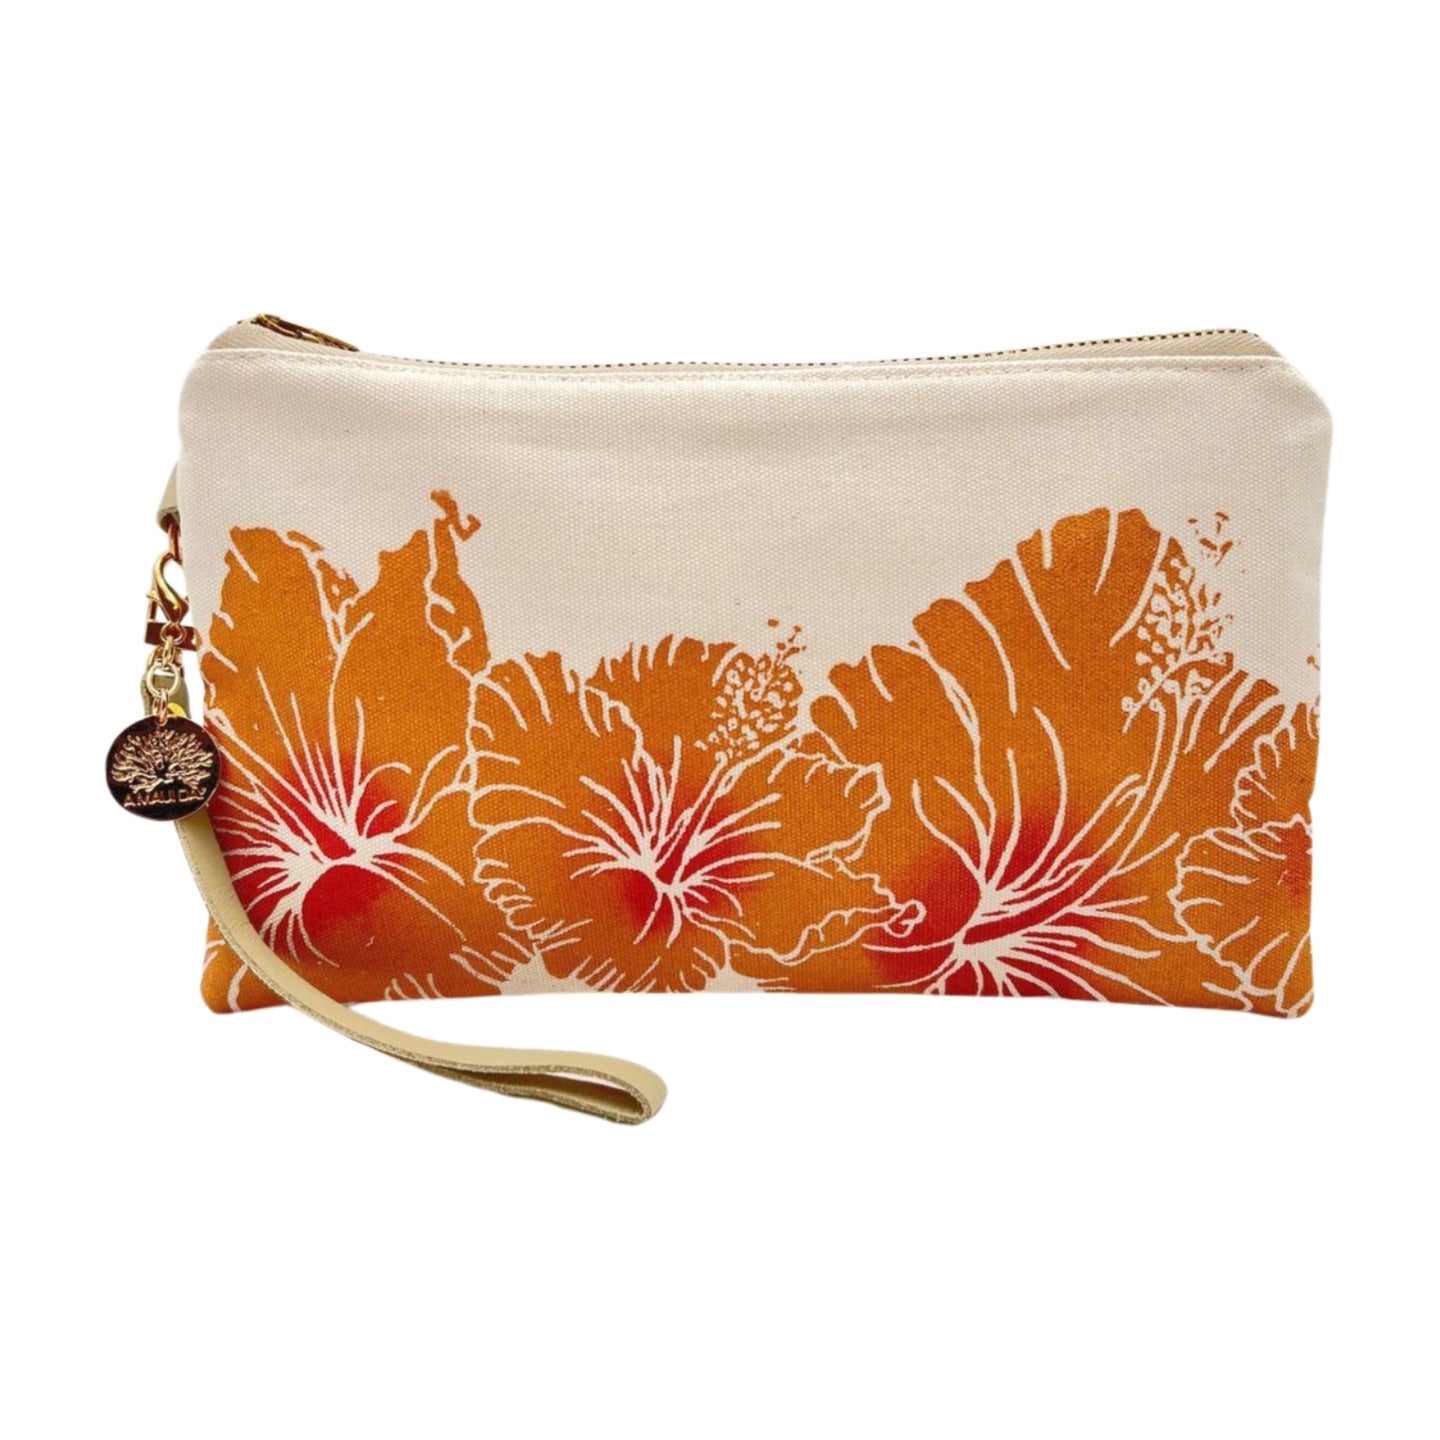 Pop-Up Mākeke - A Maui Day Original Handbags - Handprinted Small Handbag - Hibiscus on Canvas - Front View